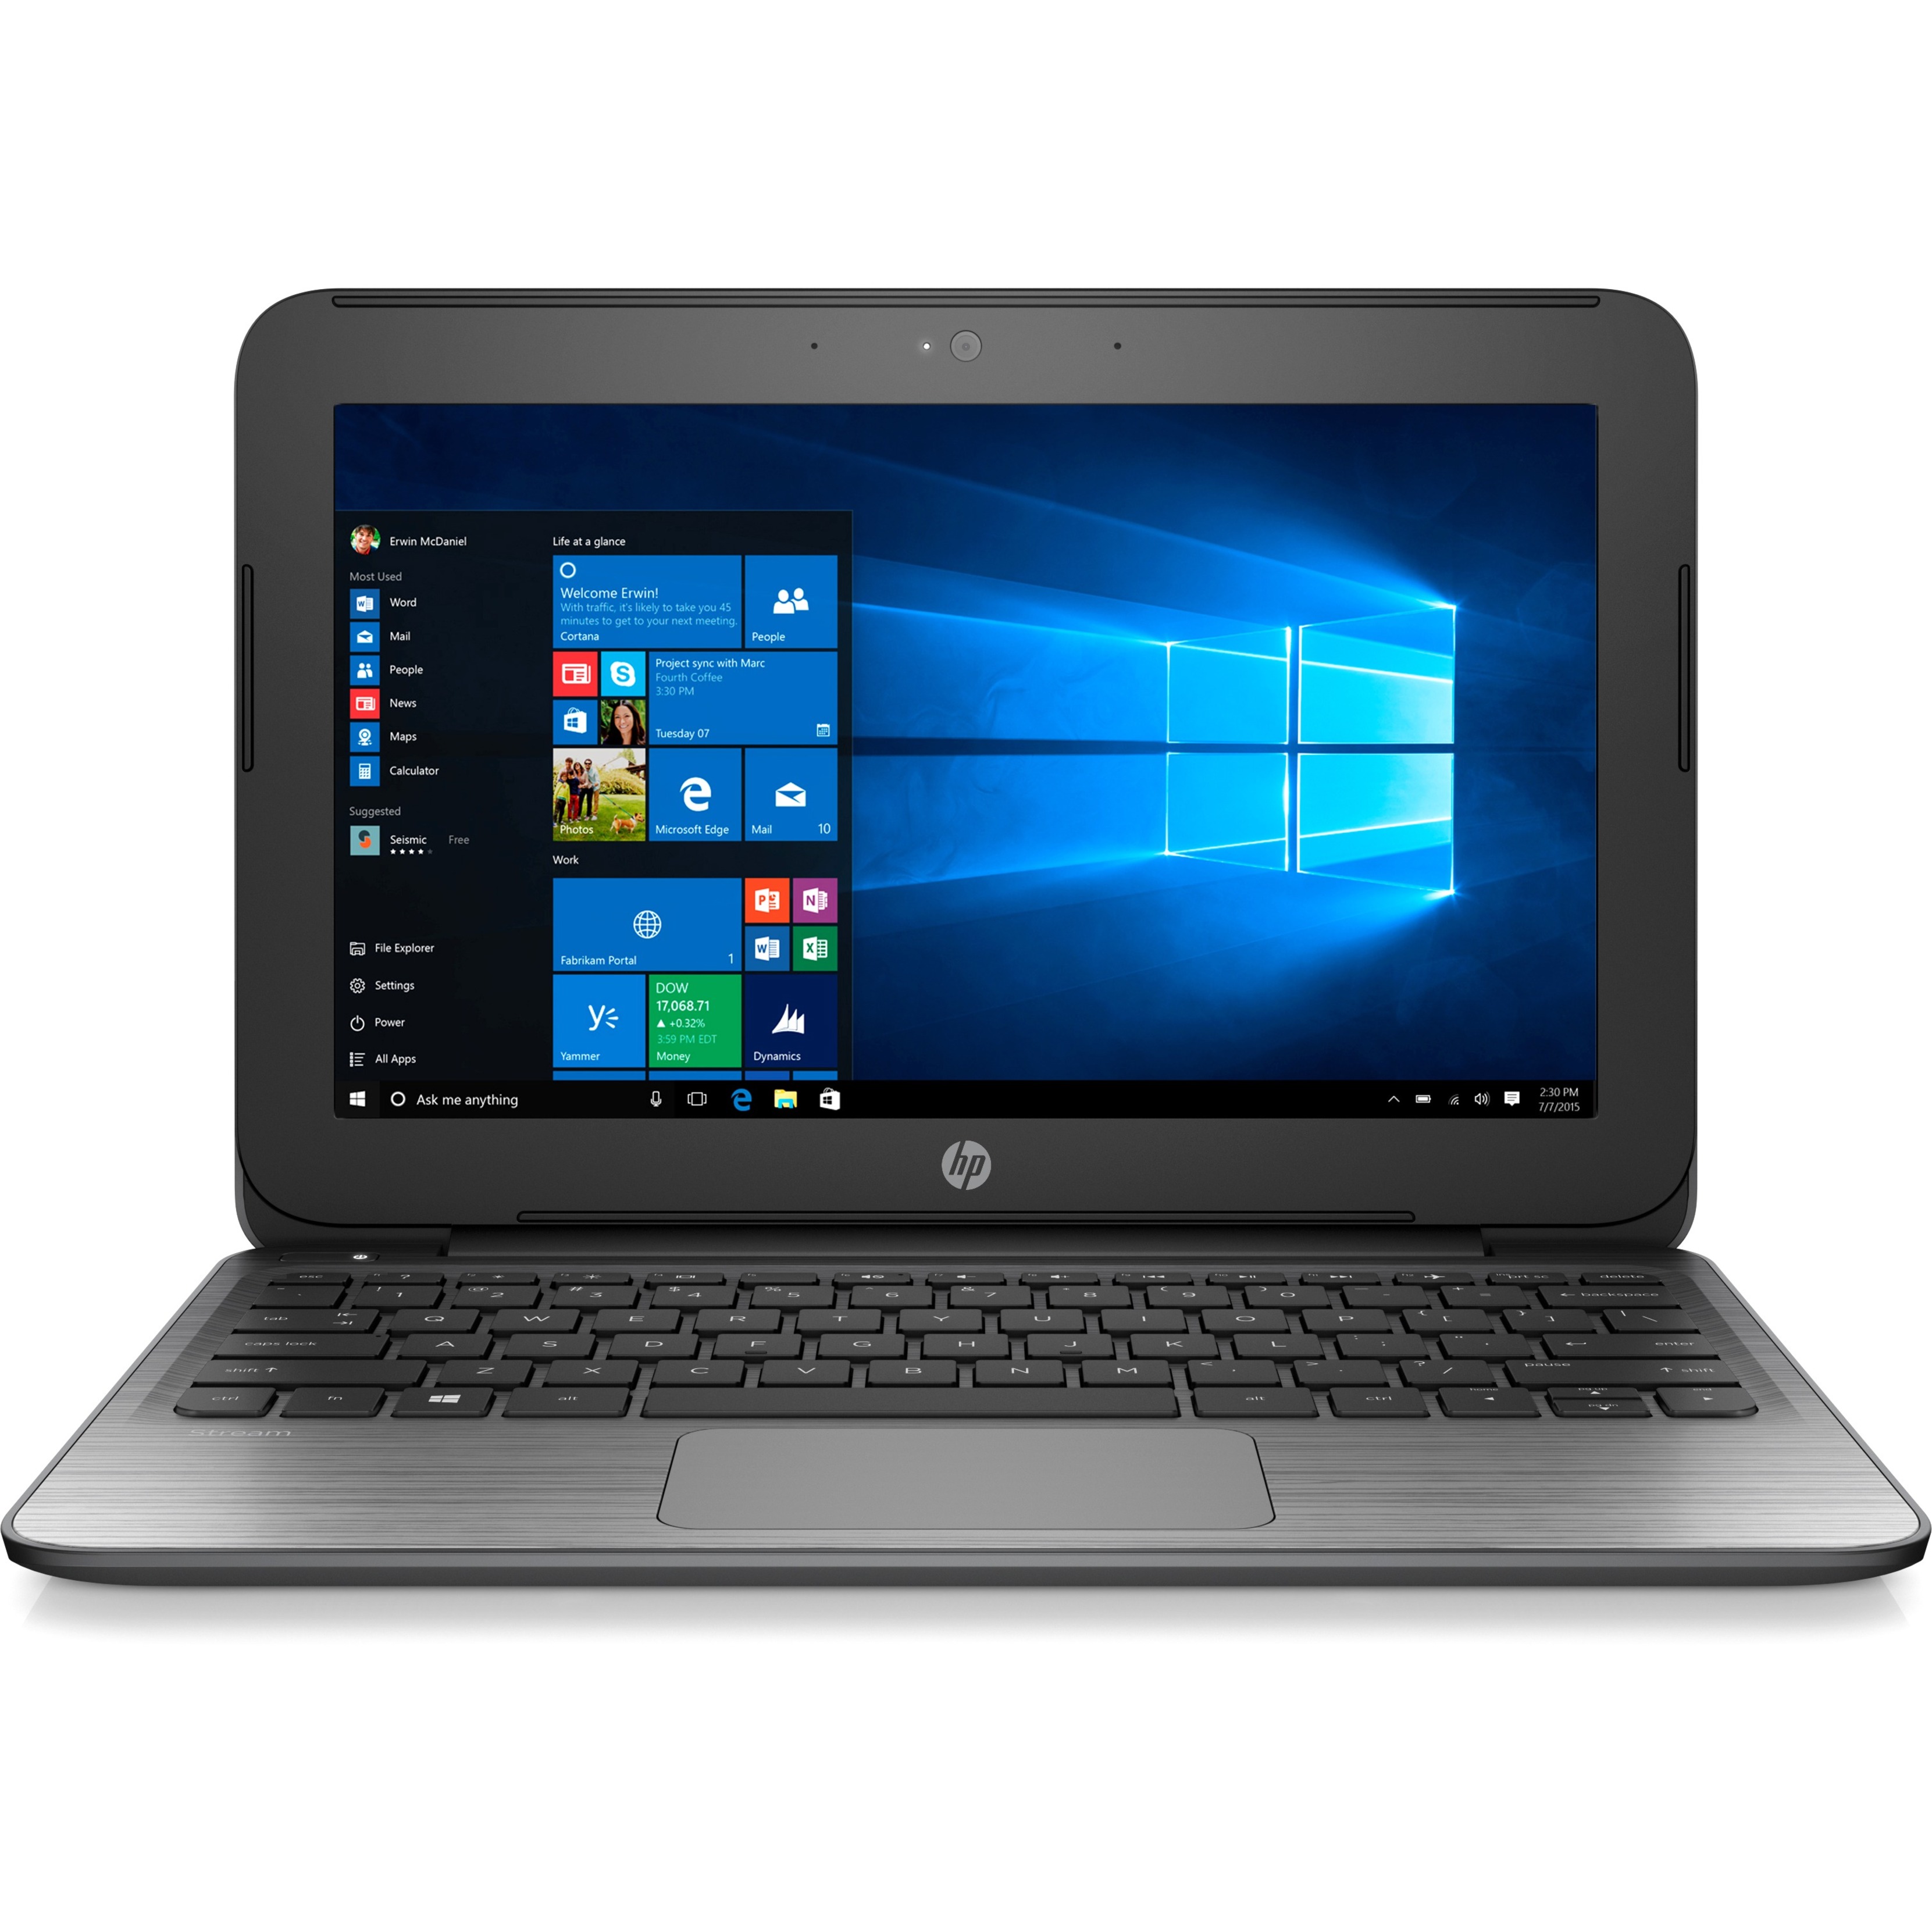 Pre-Owned HP Stream 11 Pro G2 11.6" Laptop Intel N3050 1.60GHz 4GB 64GB eMMC SSD Windows 10 Pro (Refurbished: Good) - image 3 of 4